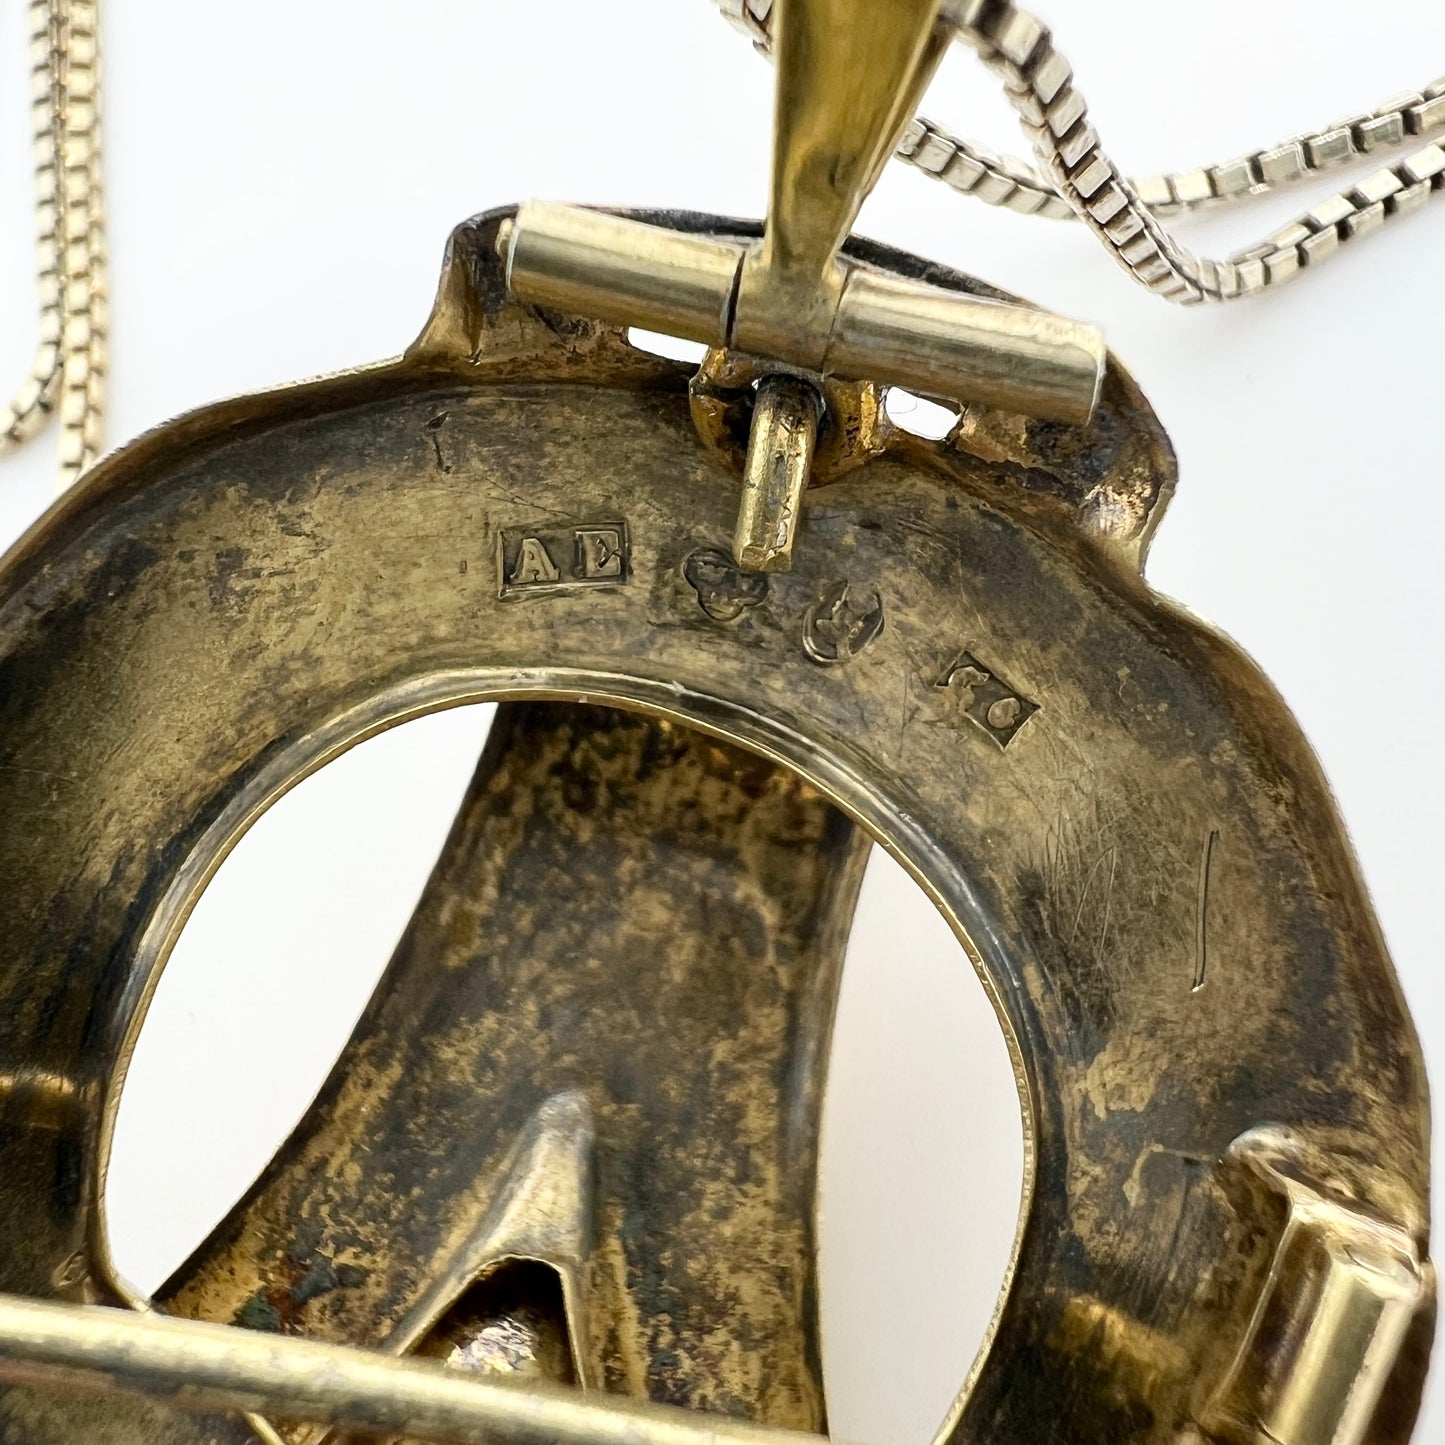 Anders Ekholm, Sweden 1881, Antique Victorian Solid Silver Pendant + Chain.